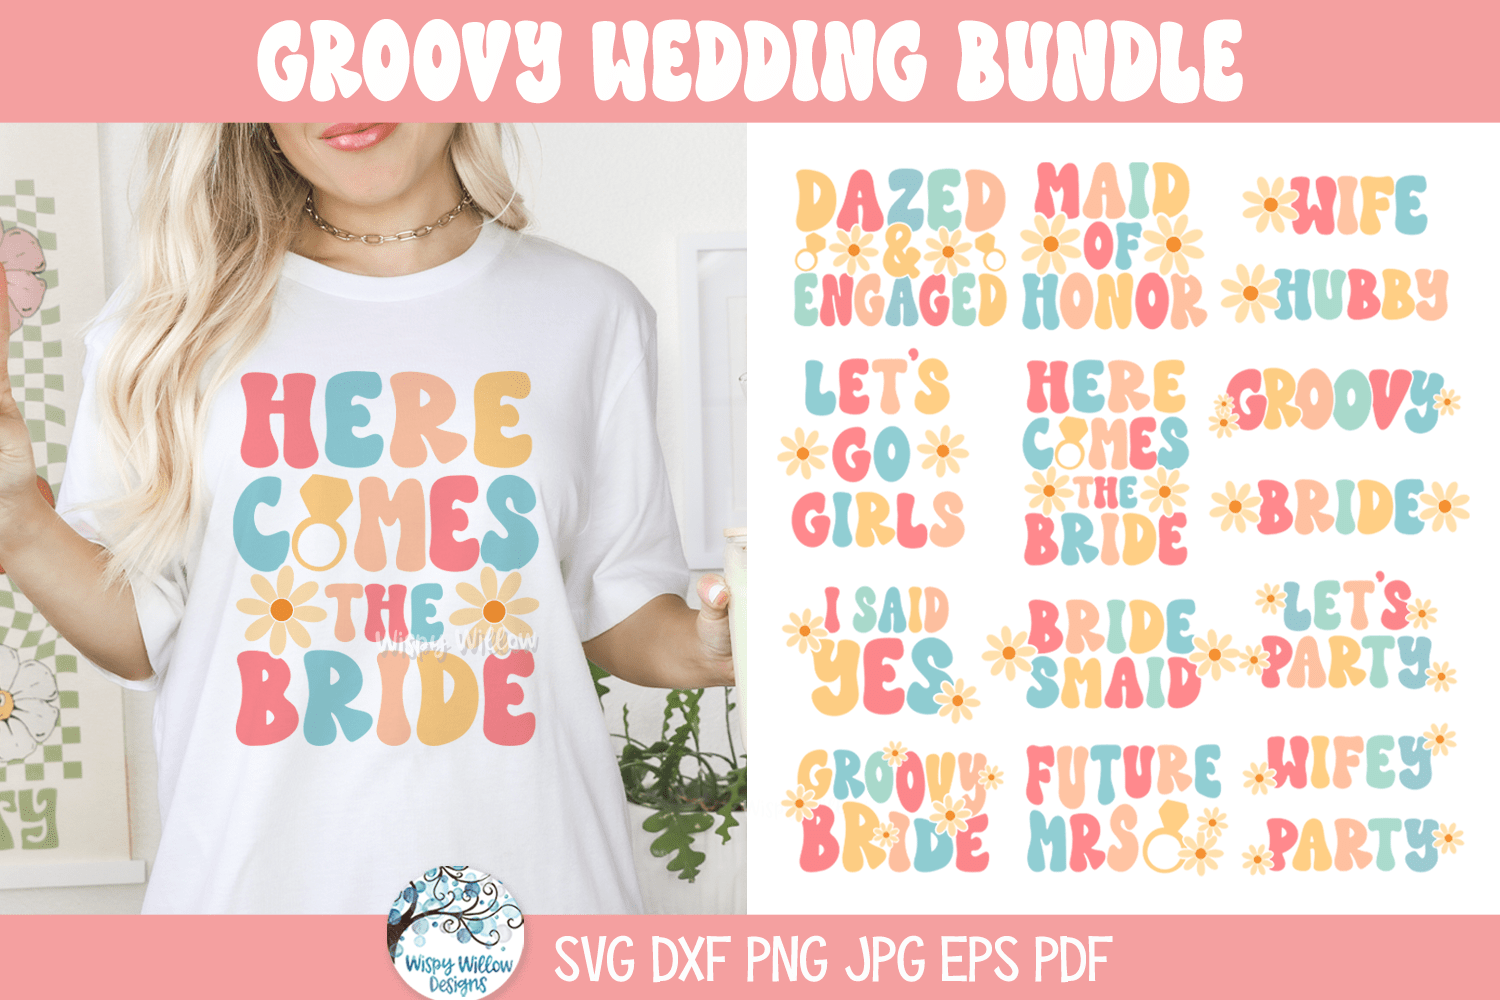 Groovy Wedding SVG Bundle | Vibrant Hippie Wedding Party Art Wispy Willow Designs Company